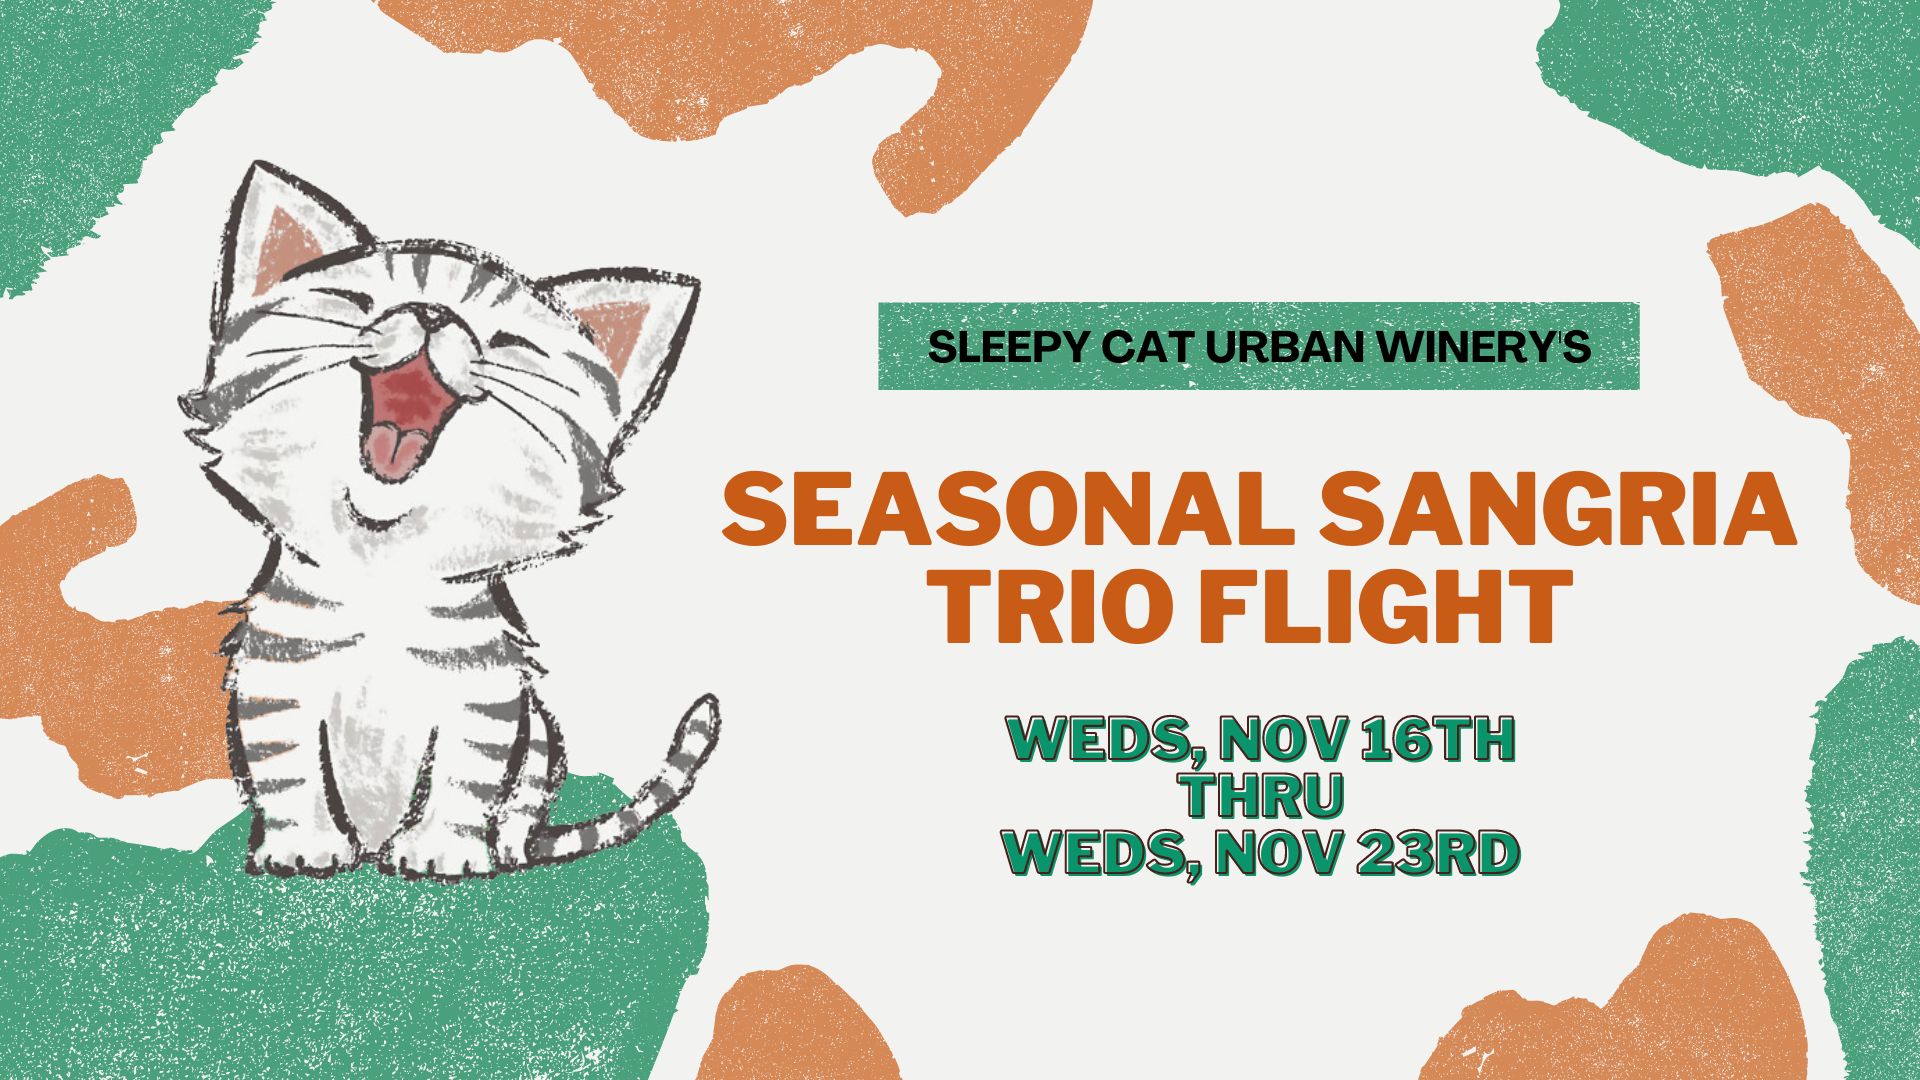 Sleepy cat urban winery’s